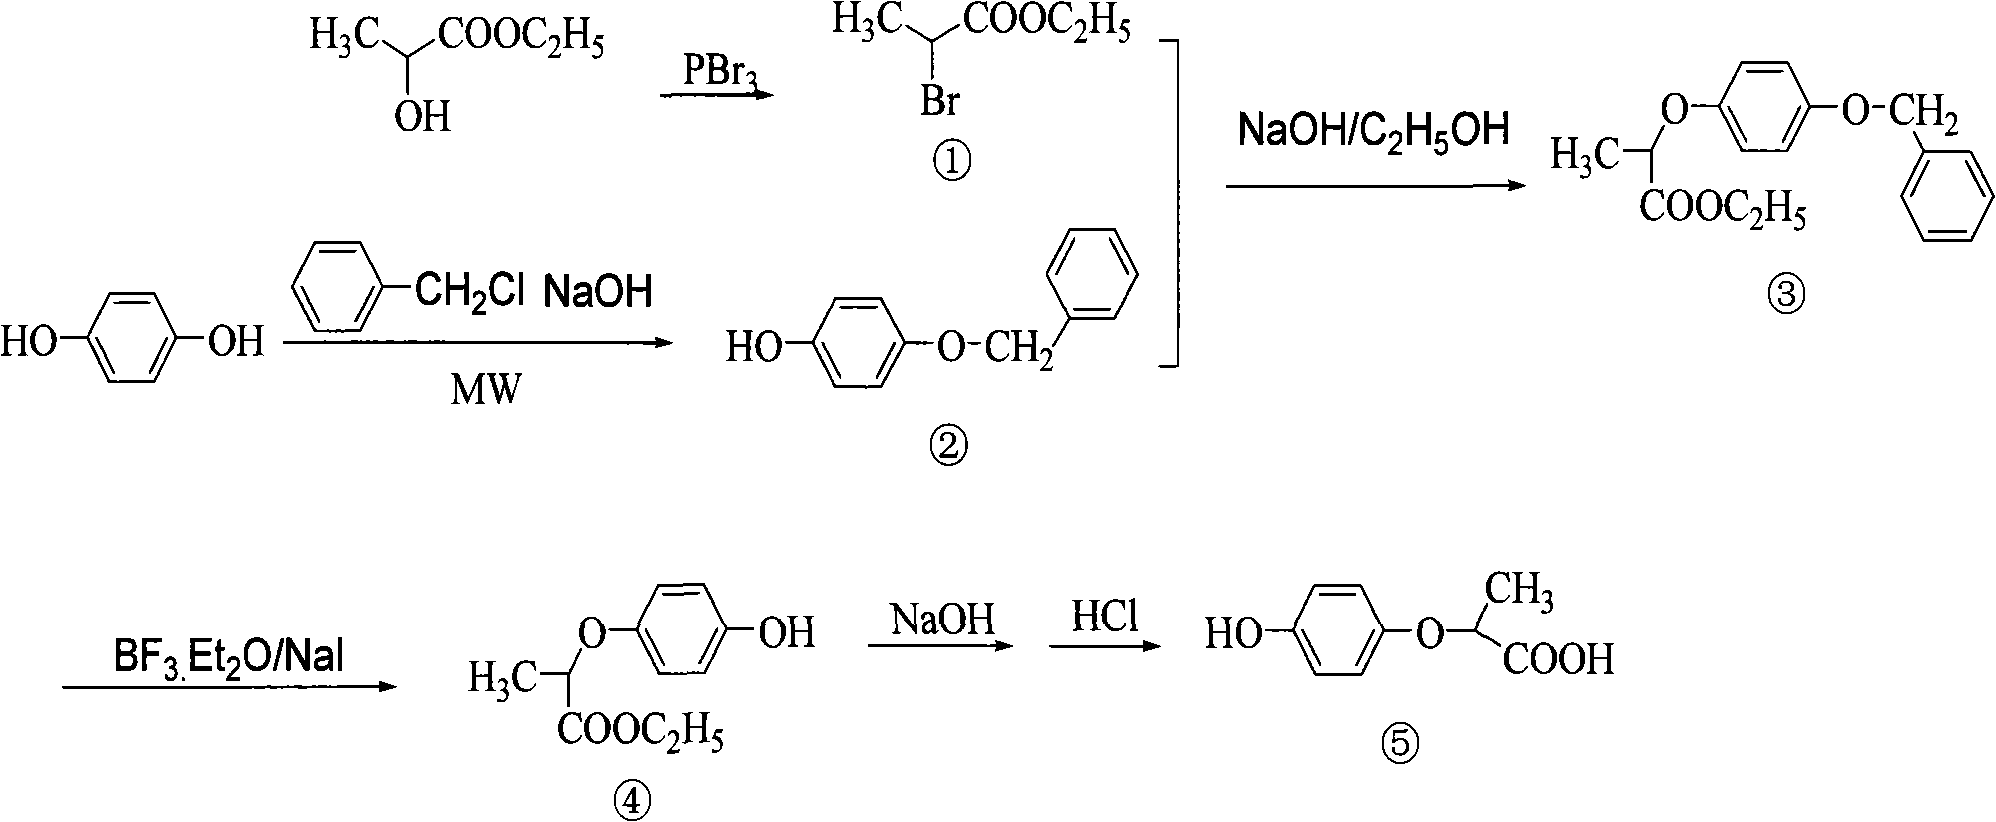 Synthesis method of 2-[4-(hydroxyphenoxy)] propionic acid